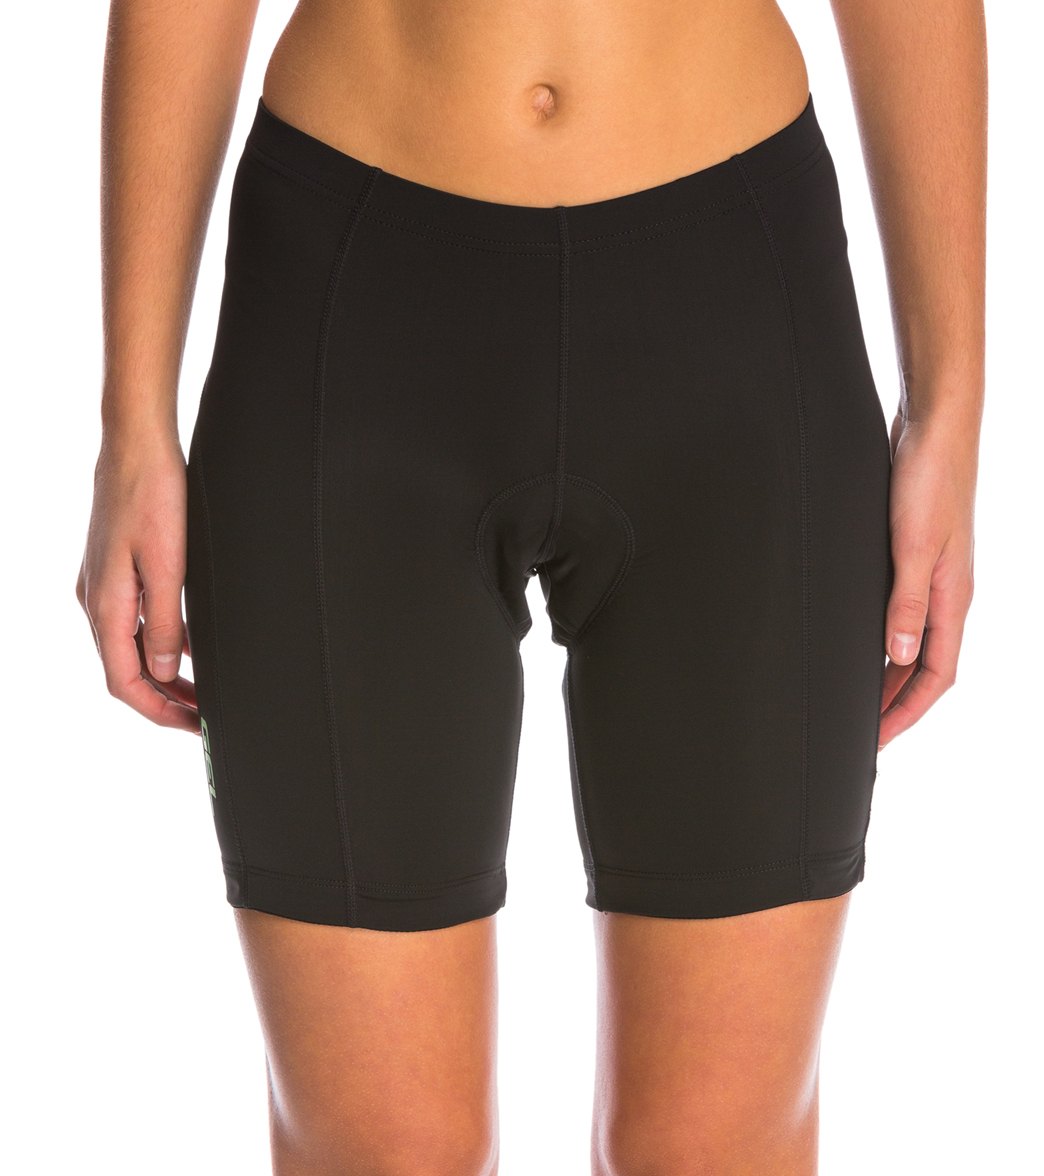 Canari Women's Pro Gel Cycling Shorts - Black Large - Swimoutlet.com